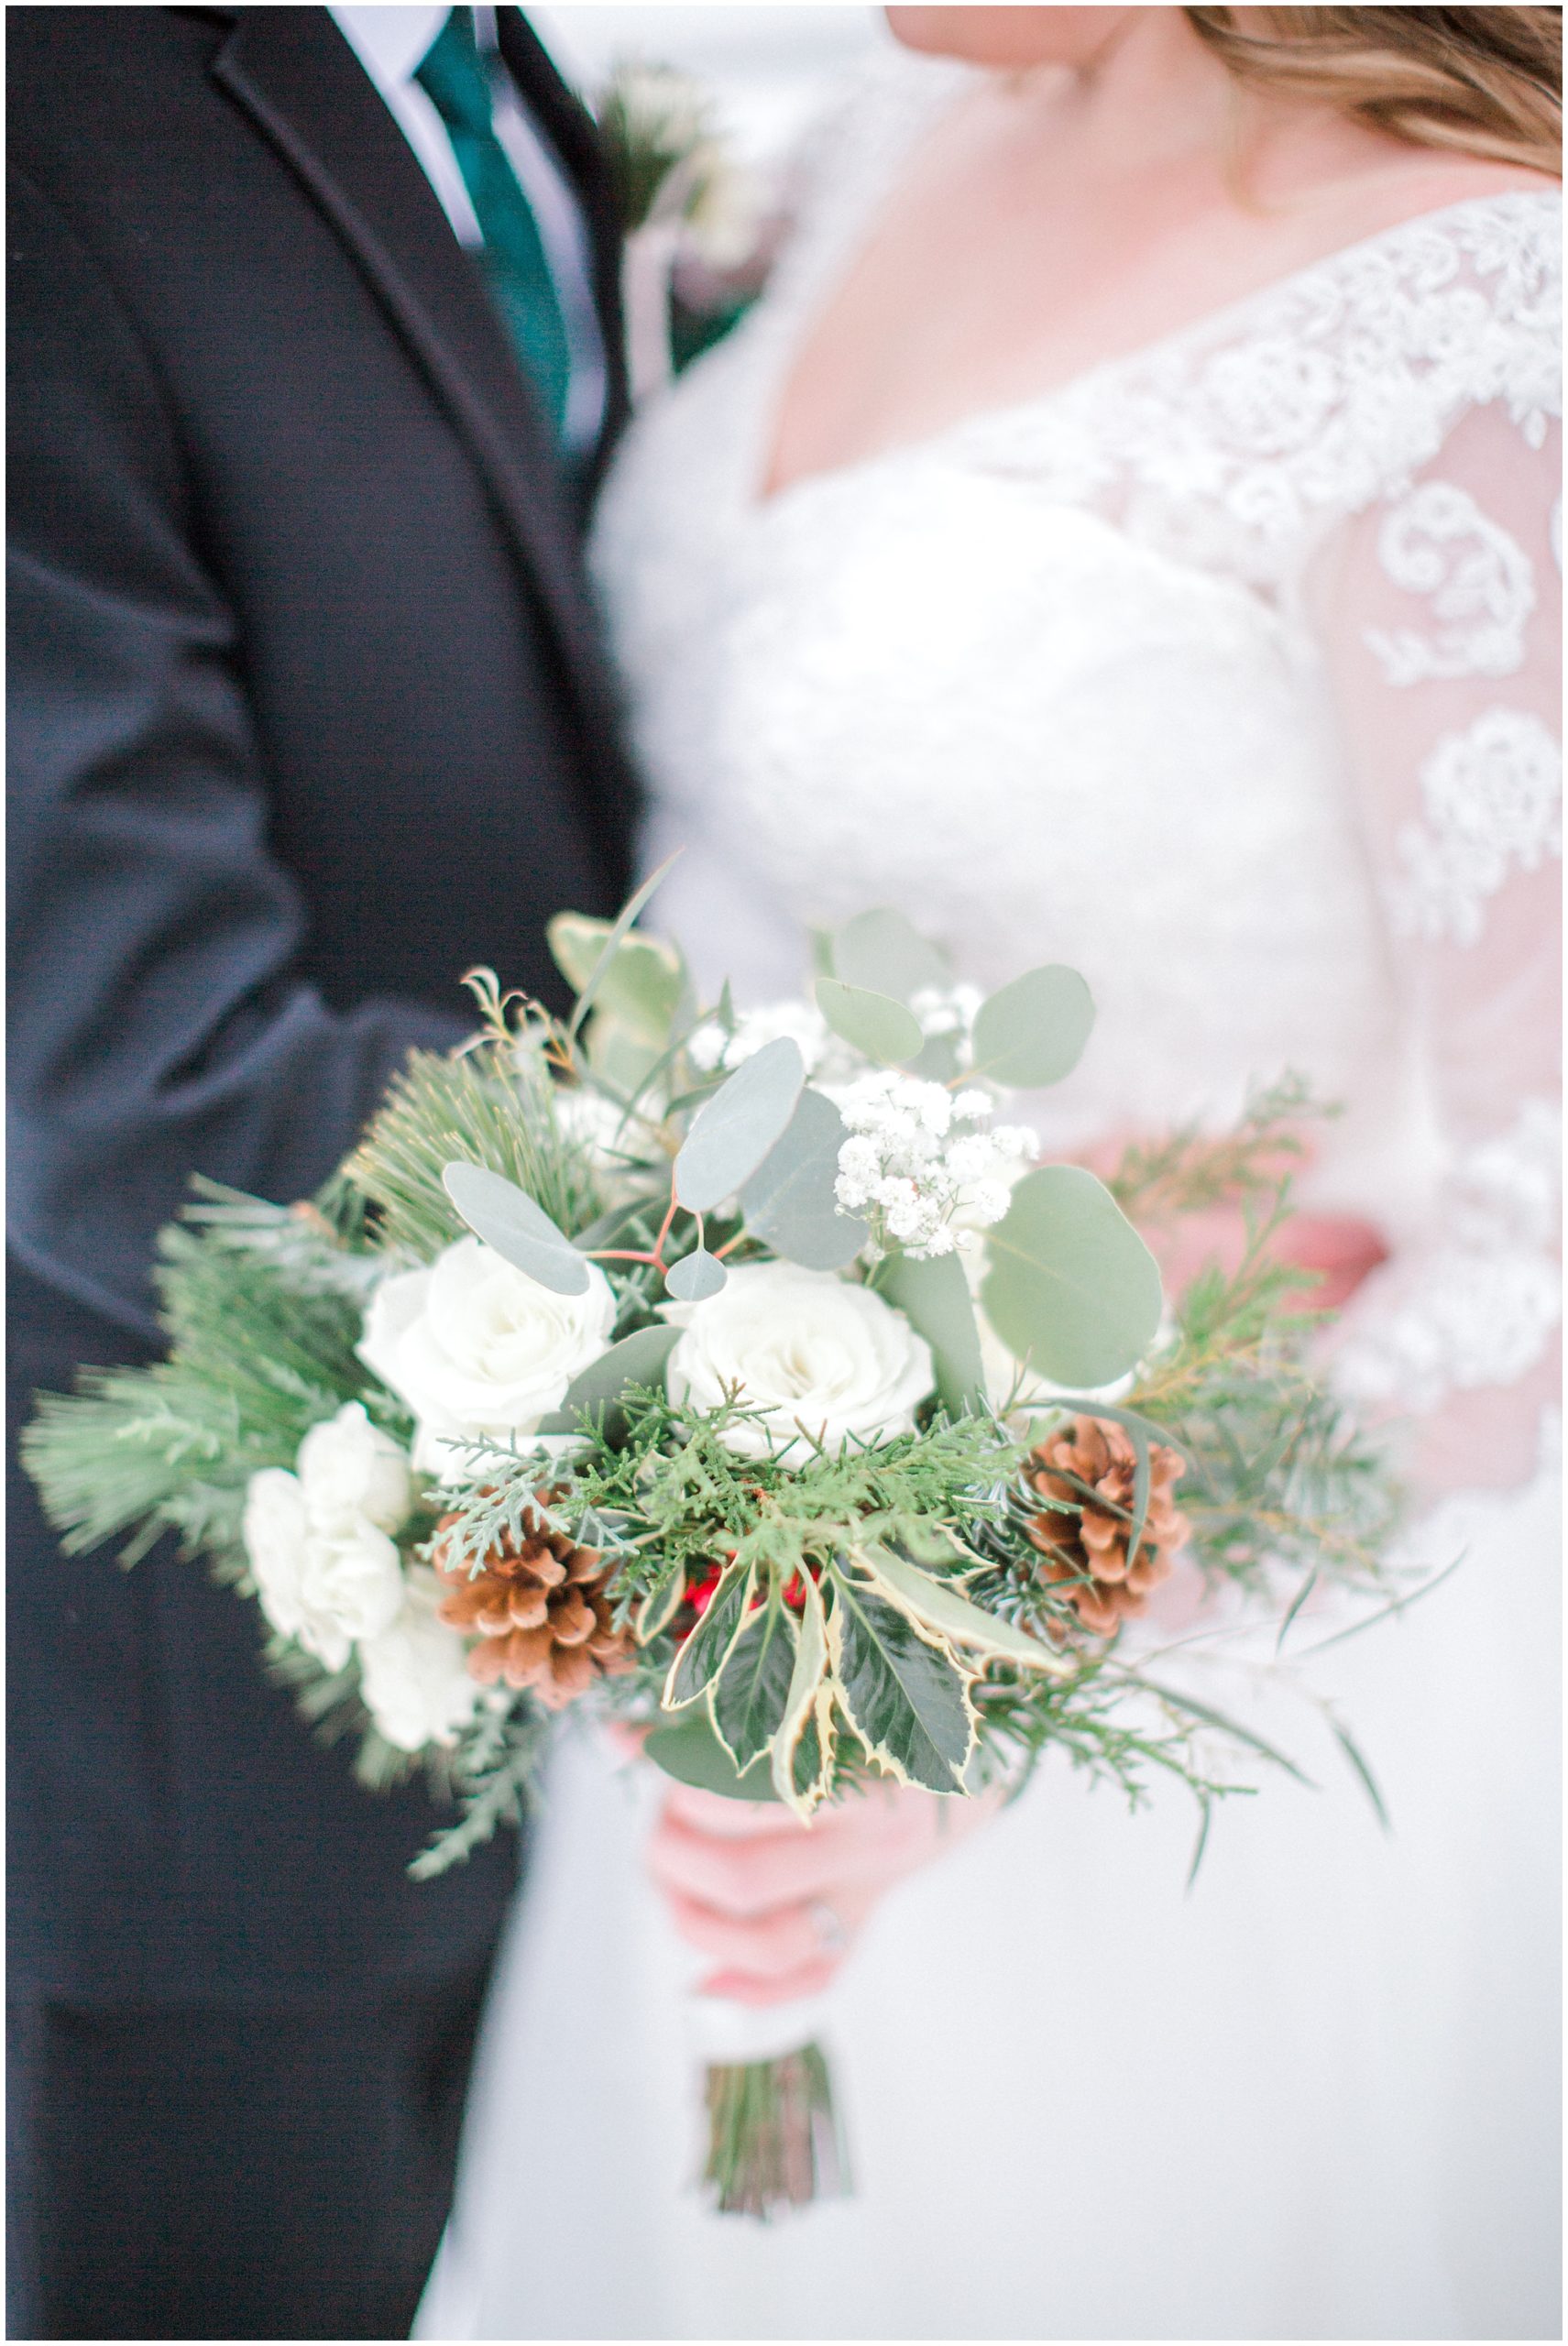 pinecones in bridal bouquet at winter wedding